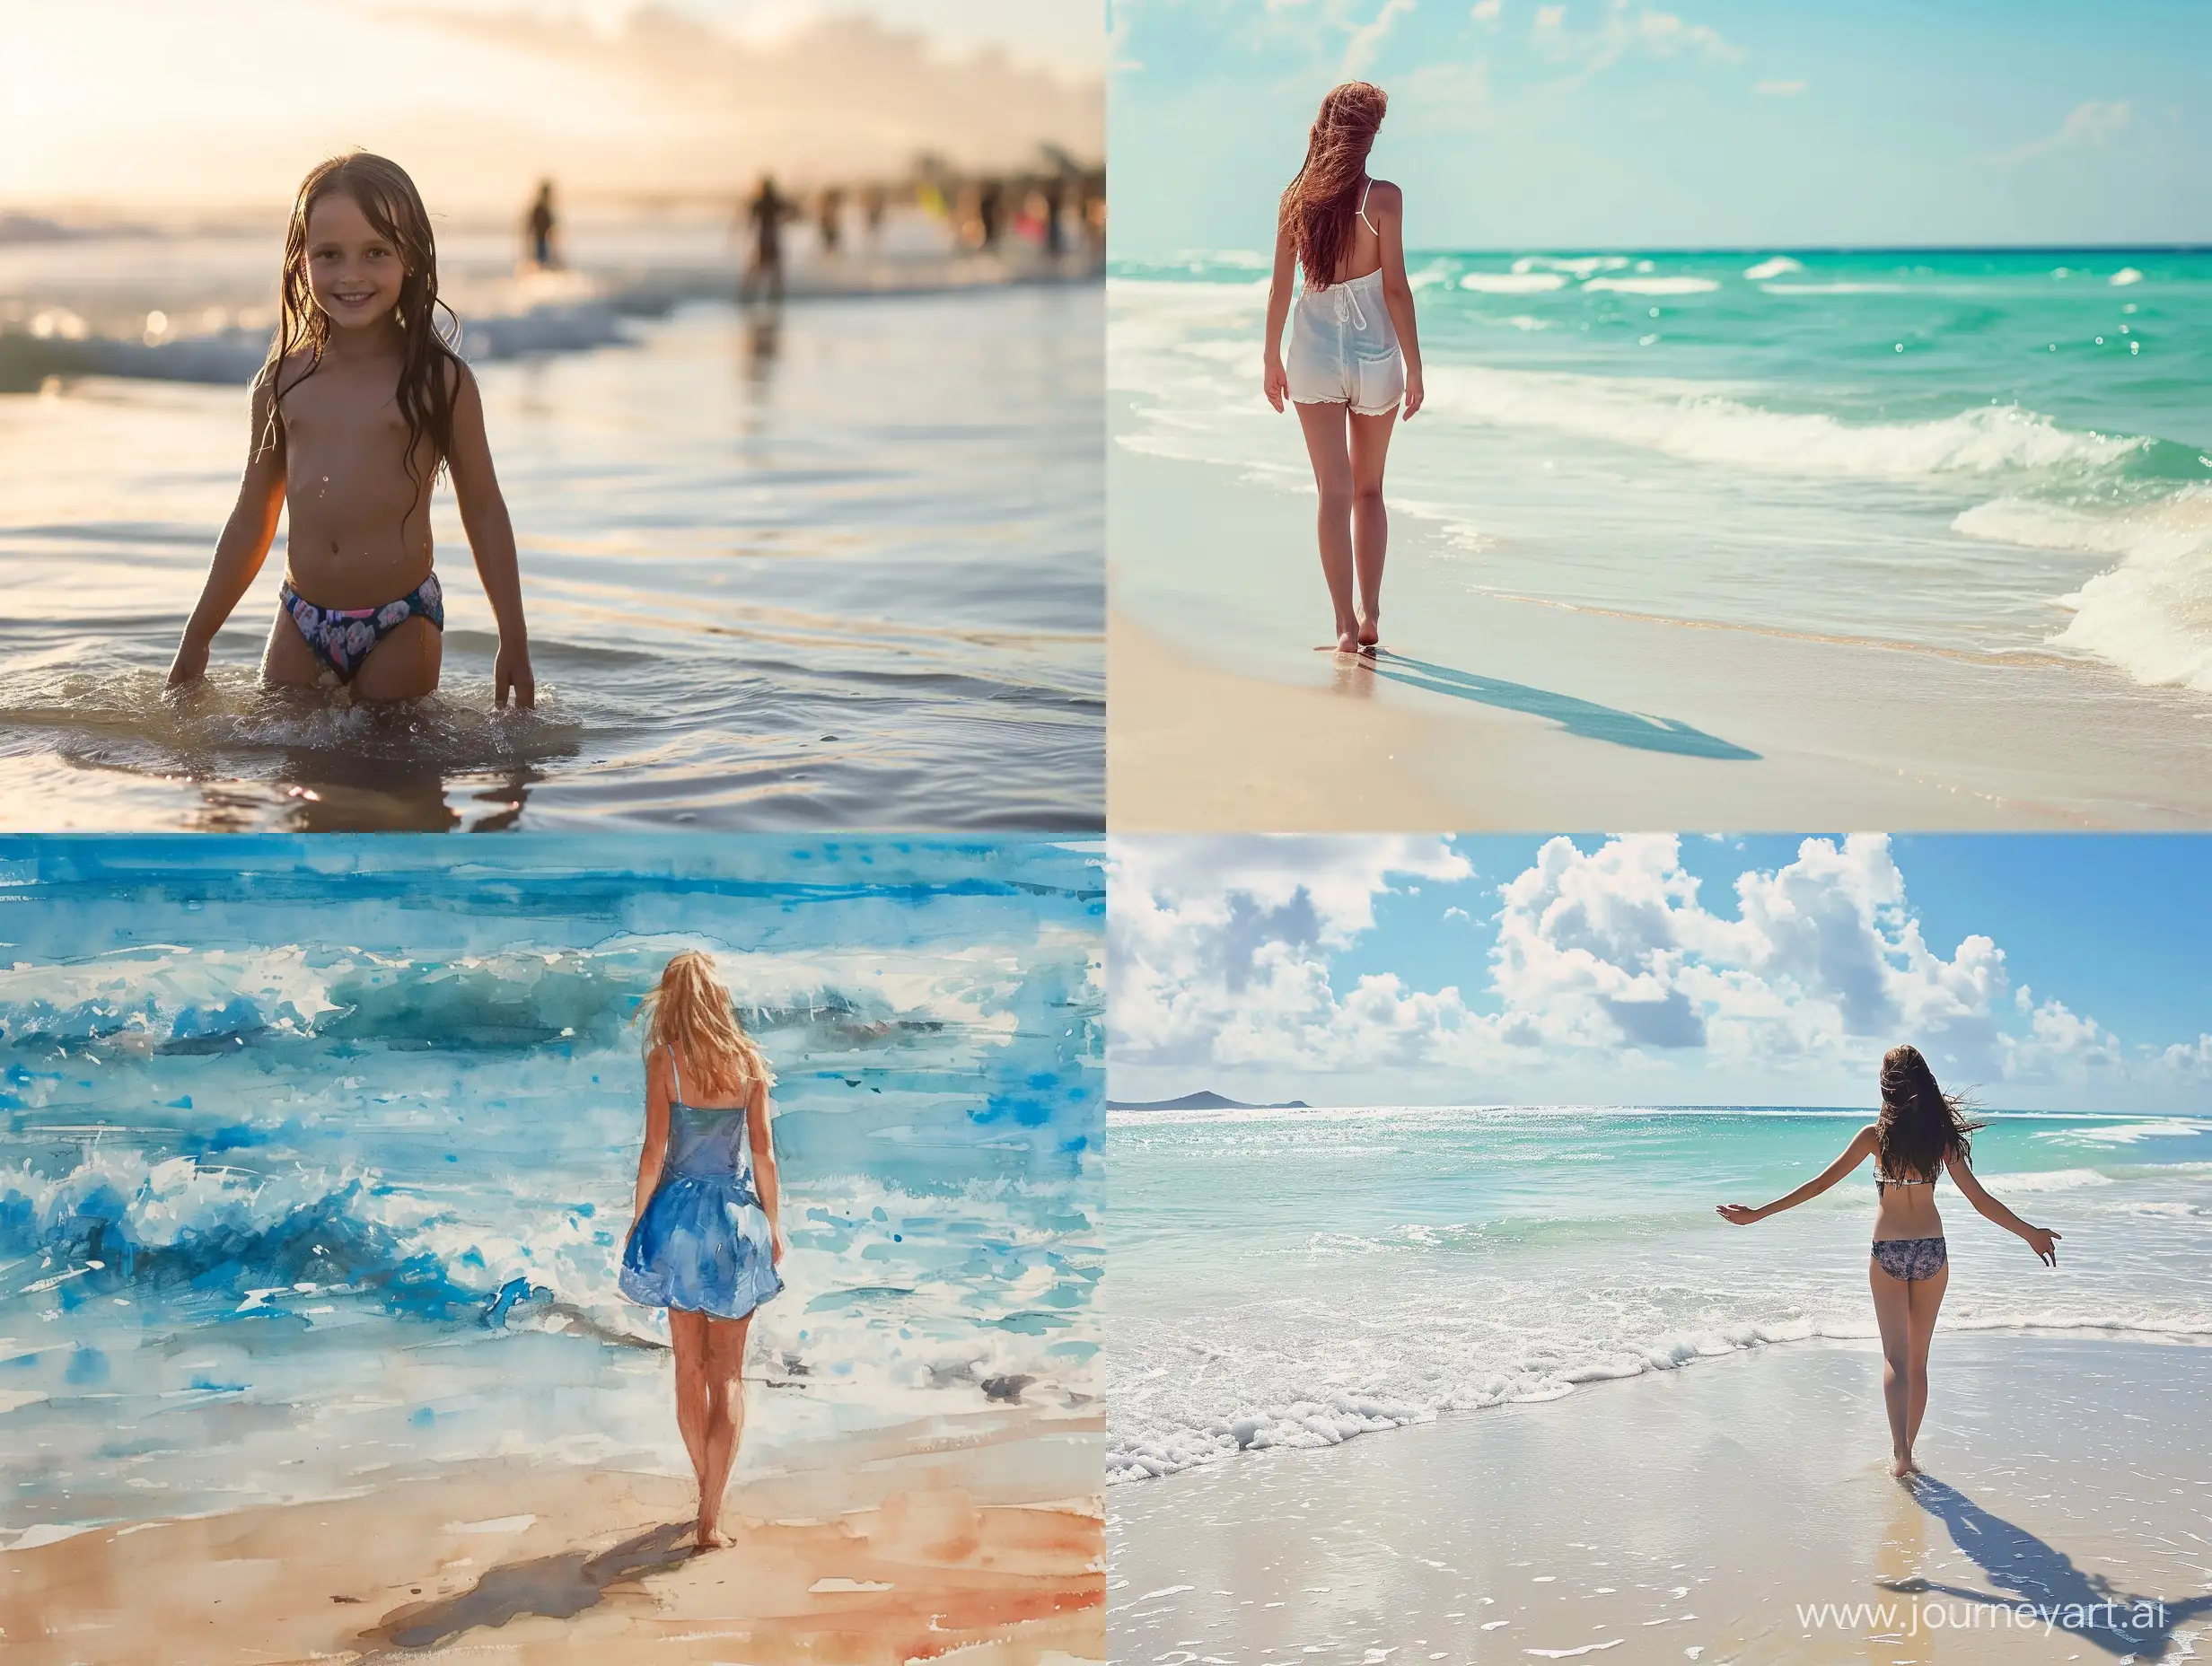 Joyful-Beach-Day-Happy-Girl-Enjoying-Sunny-Shore